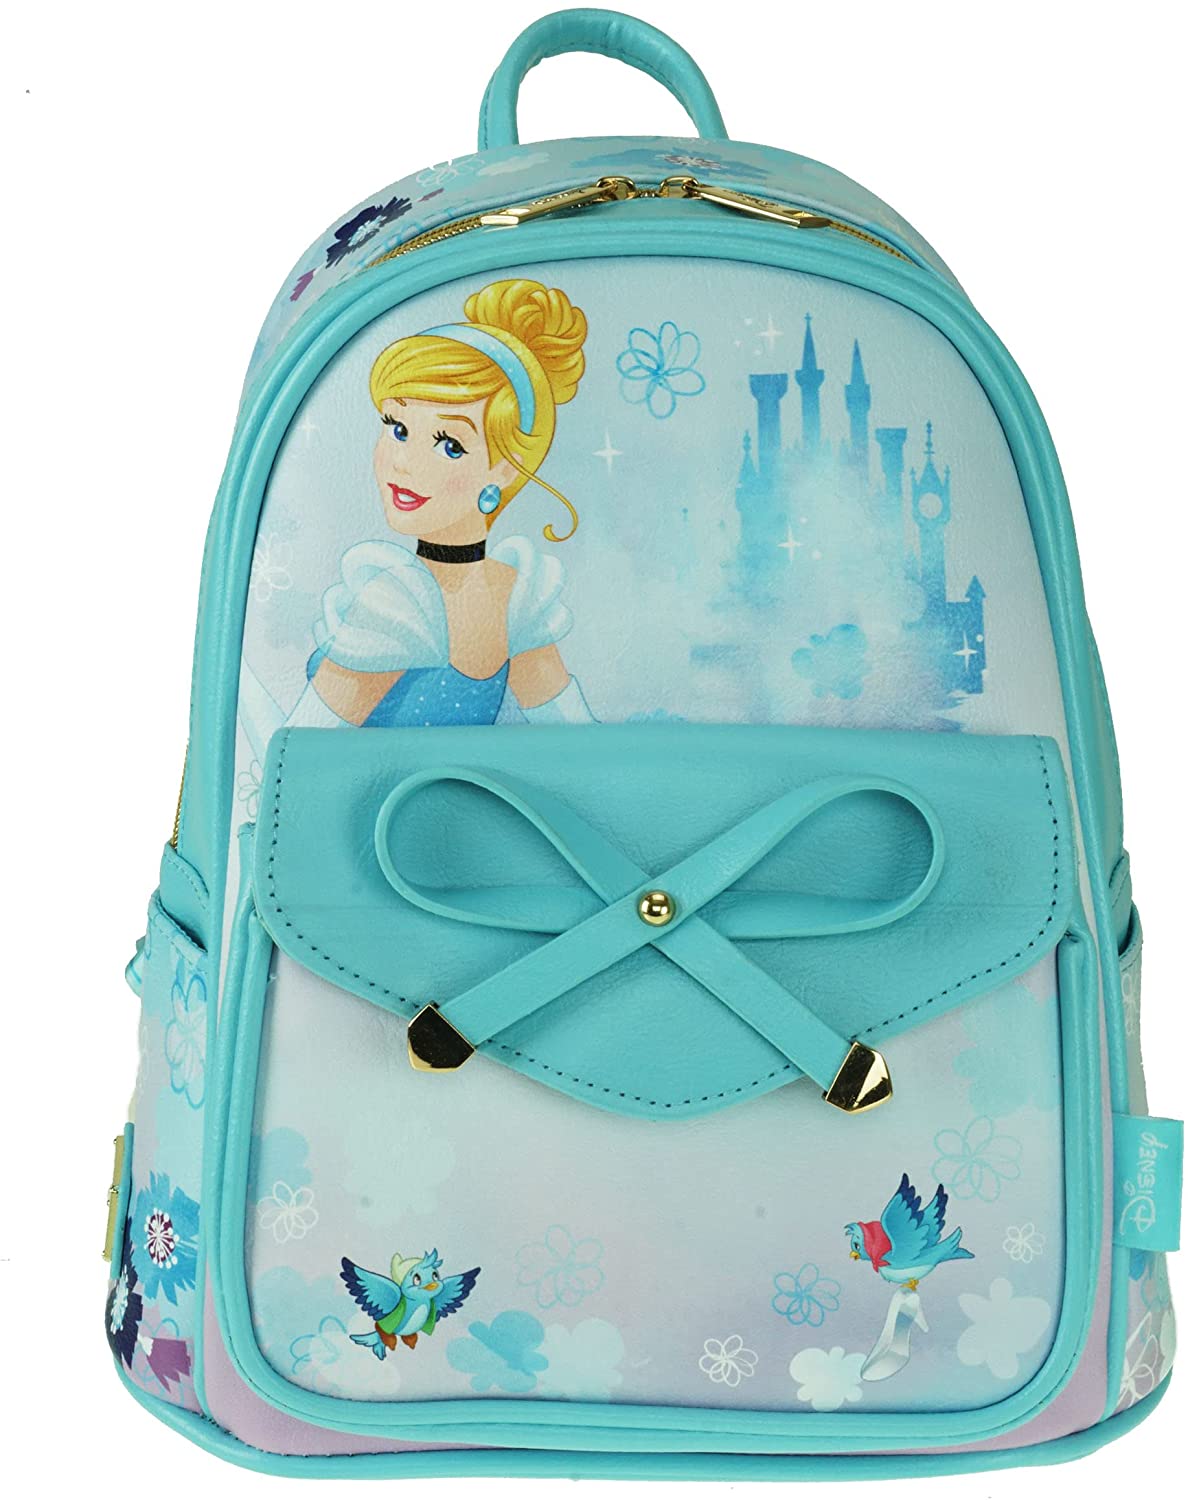 Princess - Cinderella 11" Vegan Leather Mini Backpack - A21727 - GTE Zone